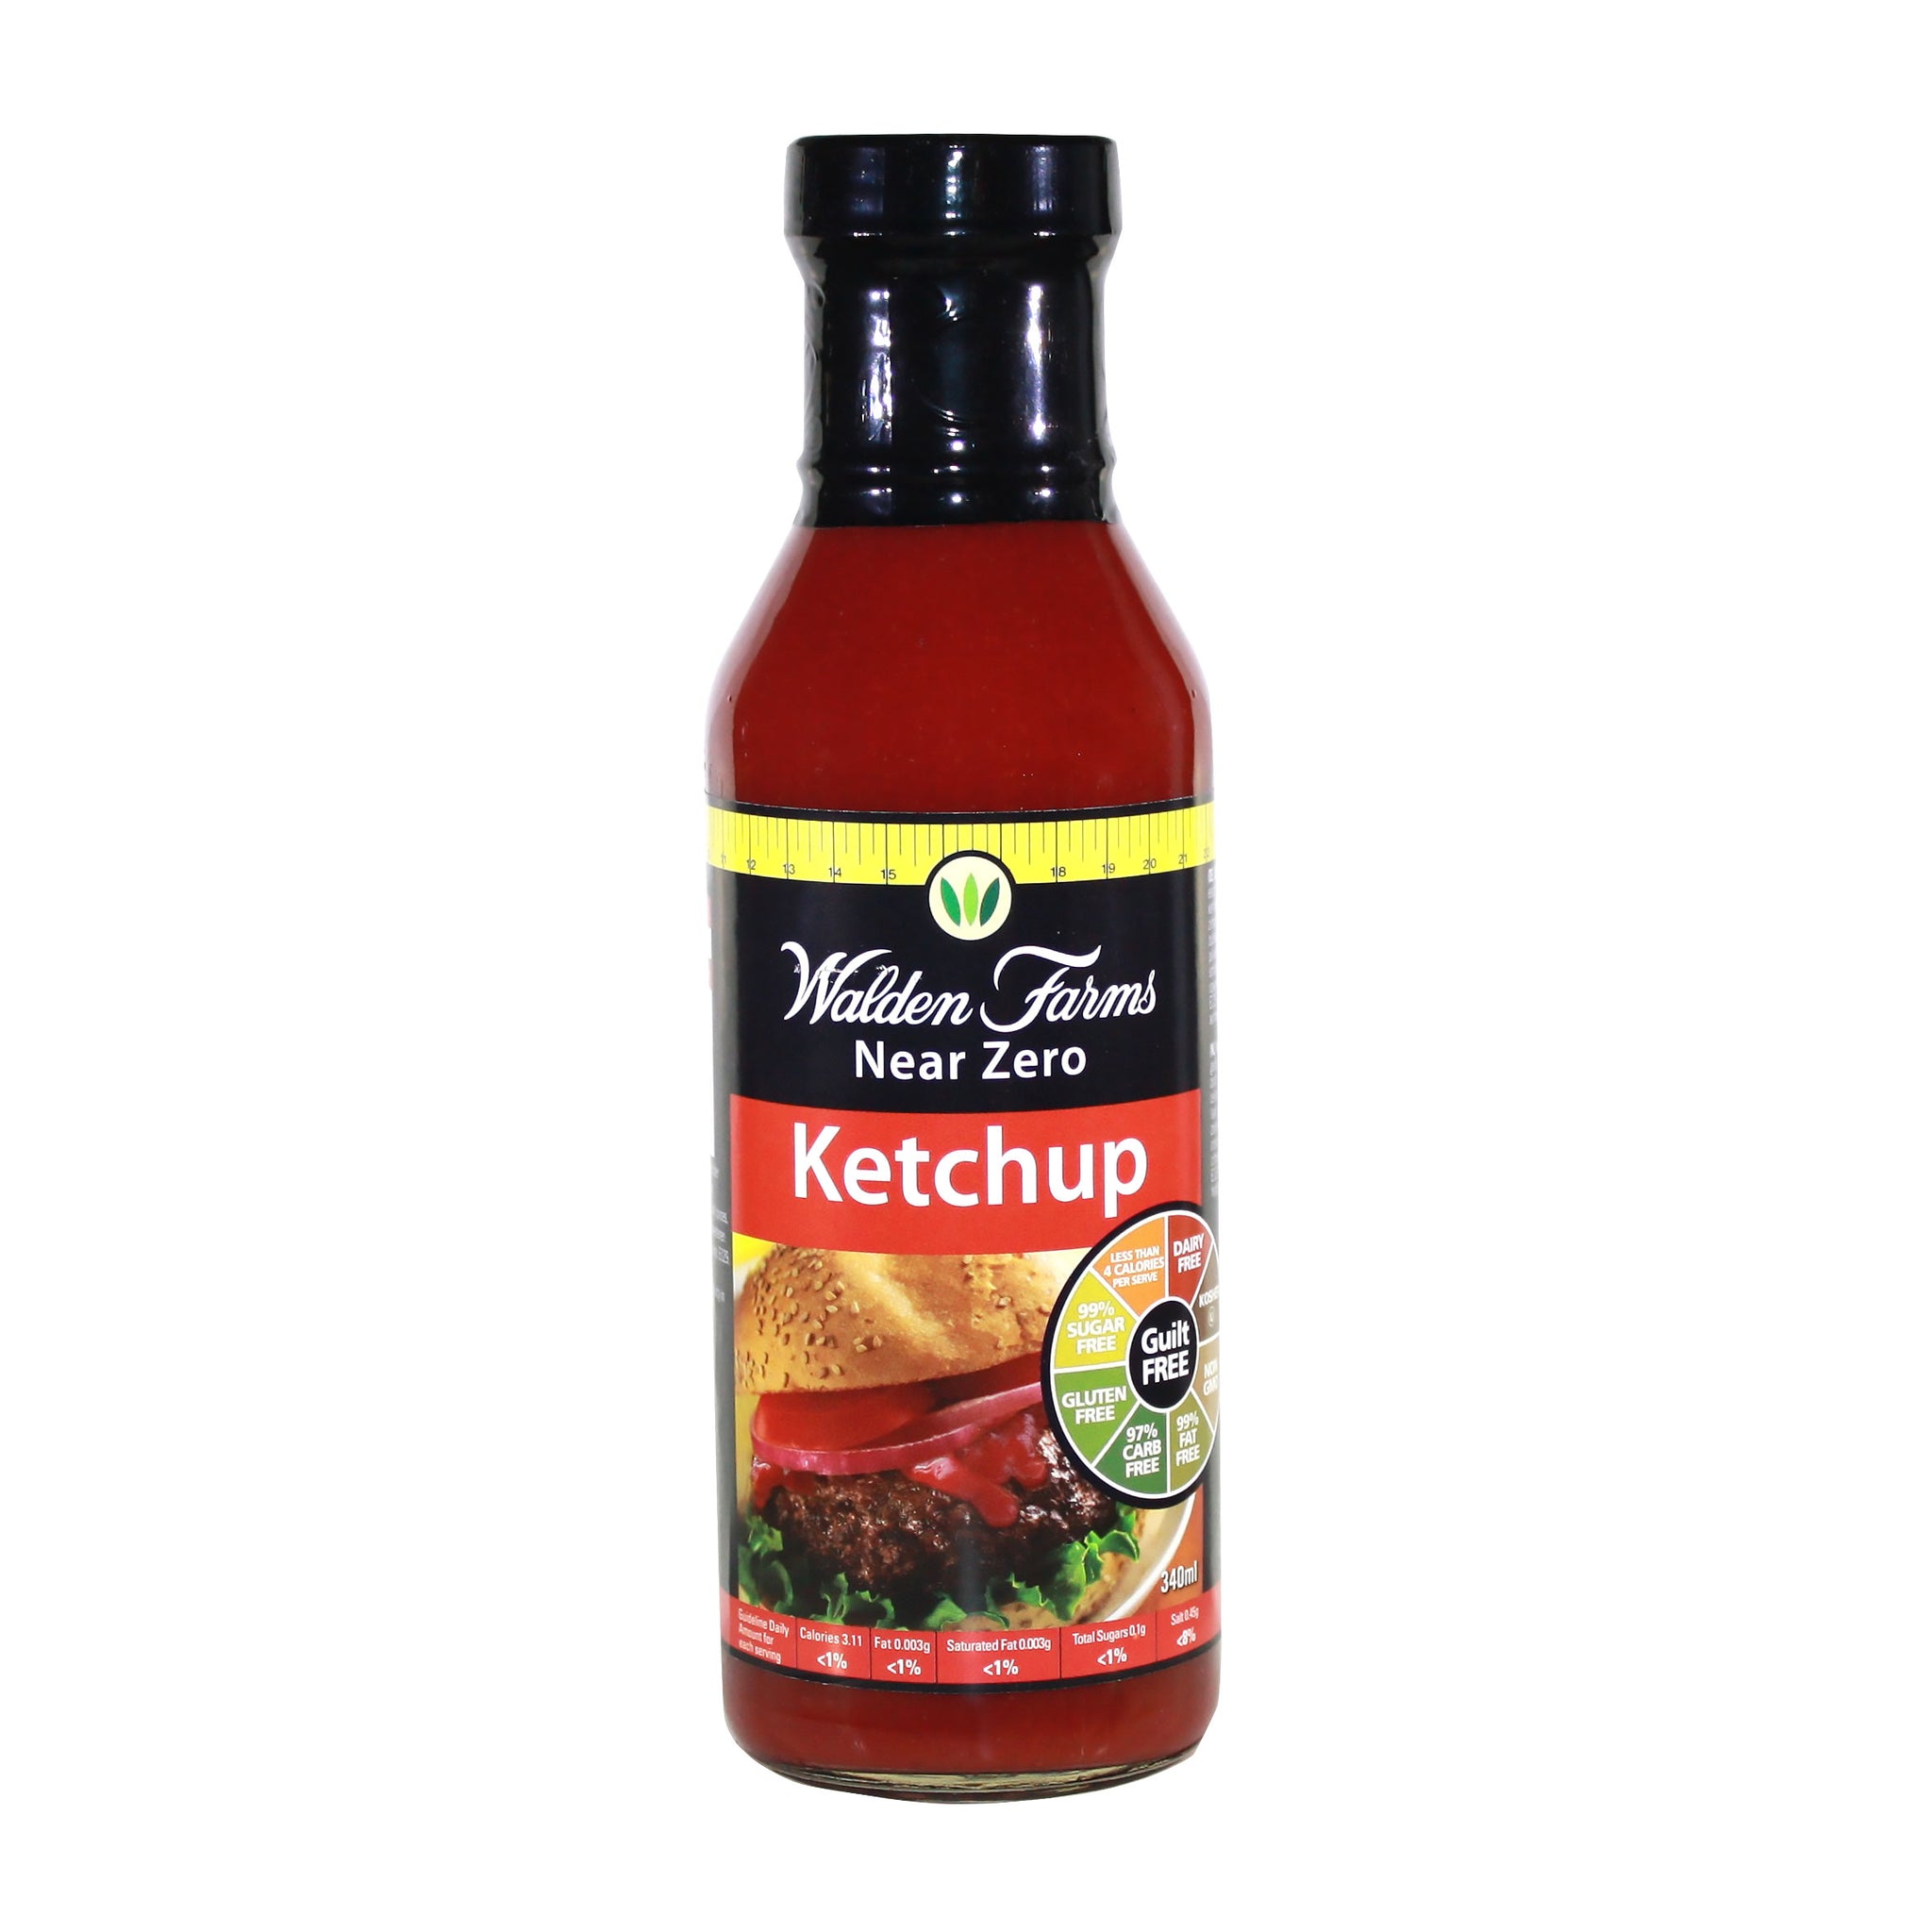 Gluten Free Vegan Tomato Ketchup with Near Zero Fat, Calorie & Sugar